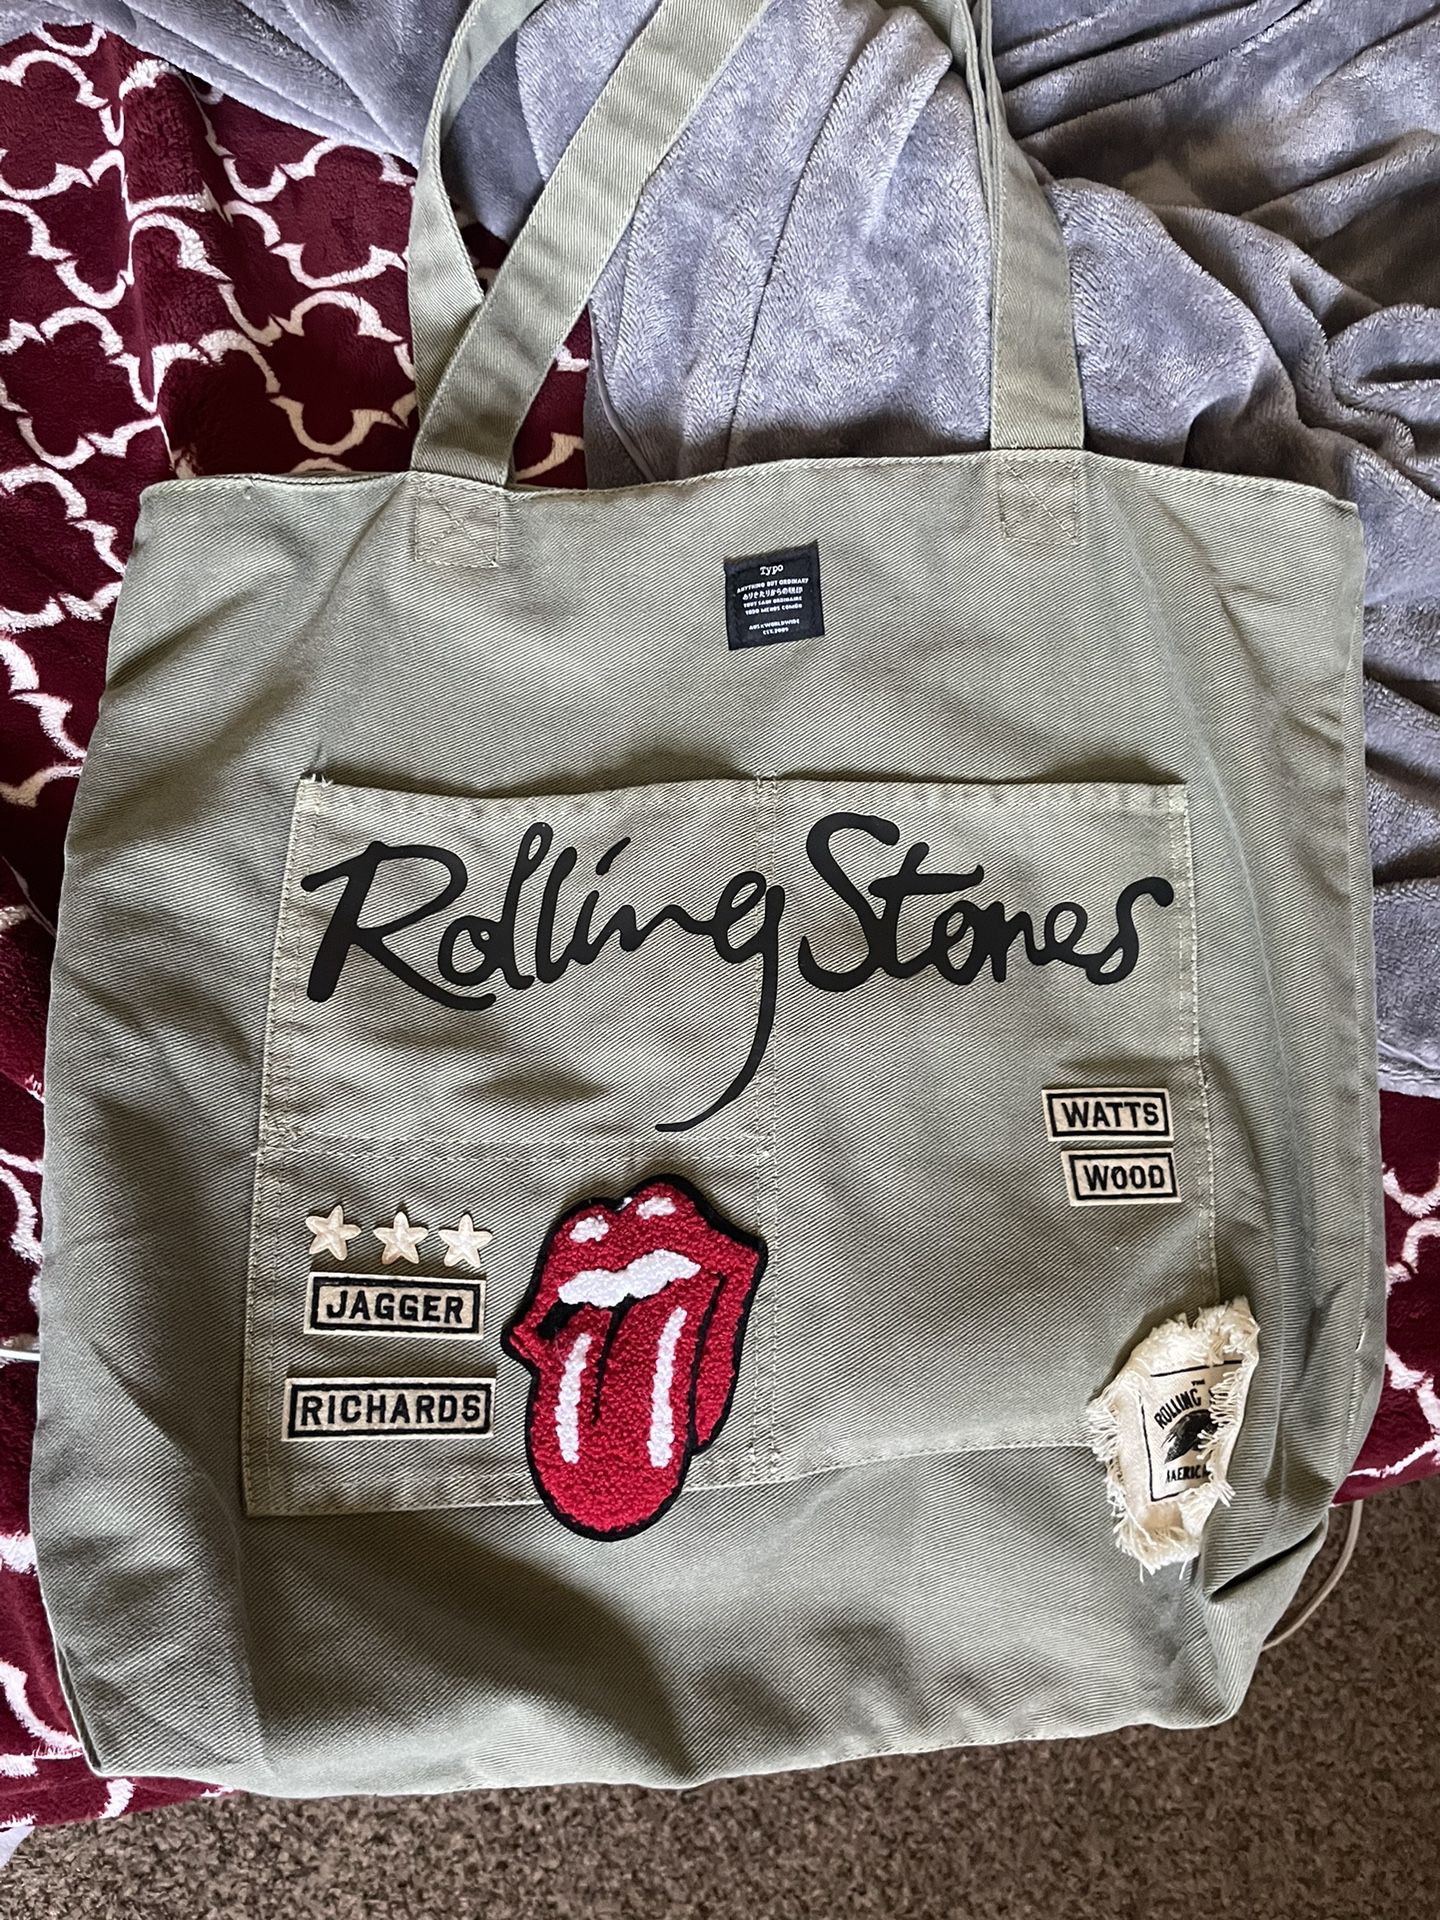 Rolling Stones Tote Bag